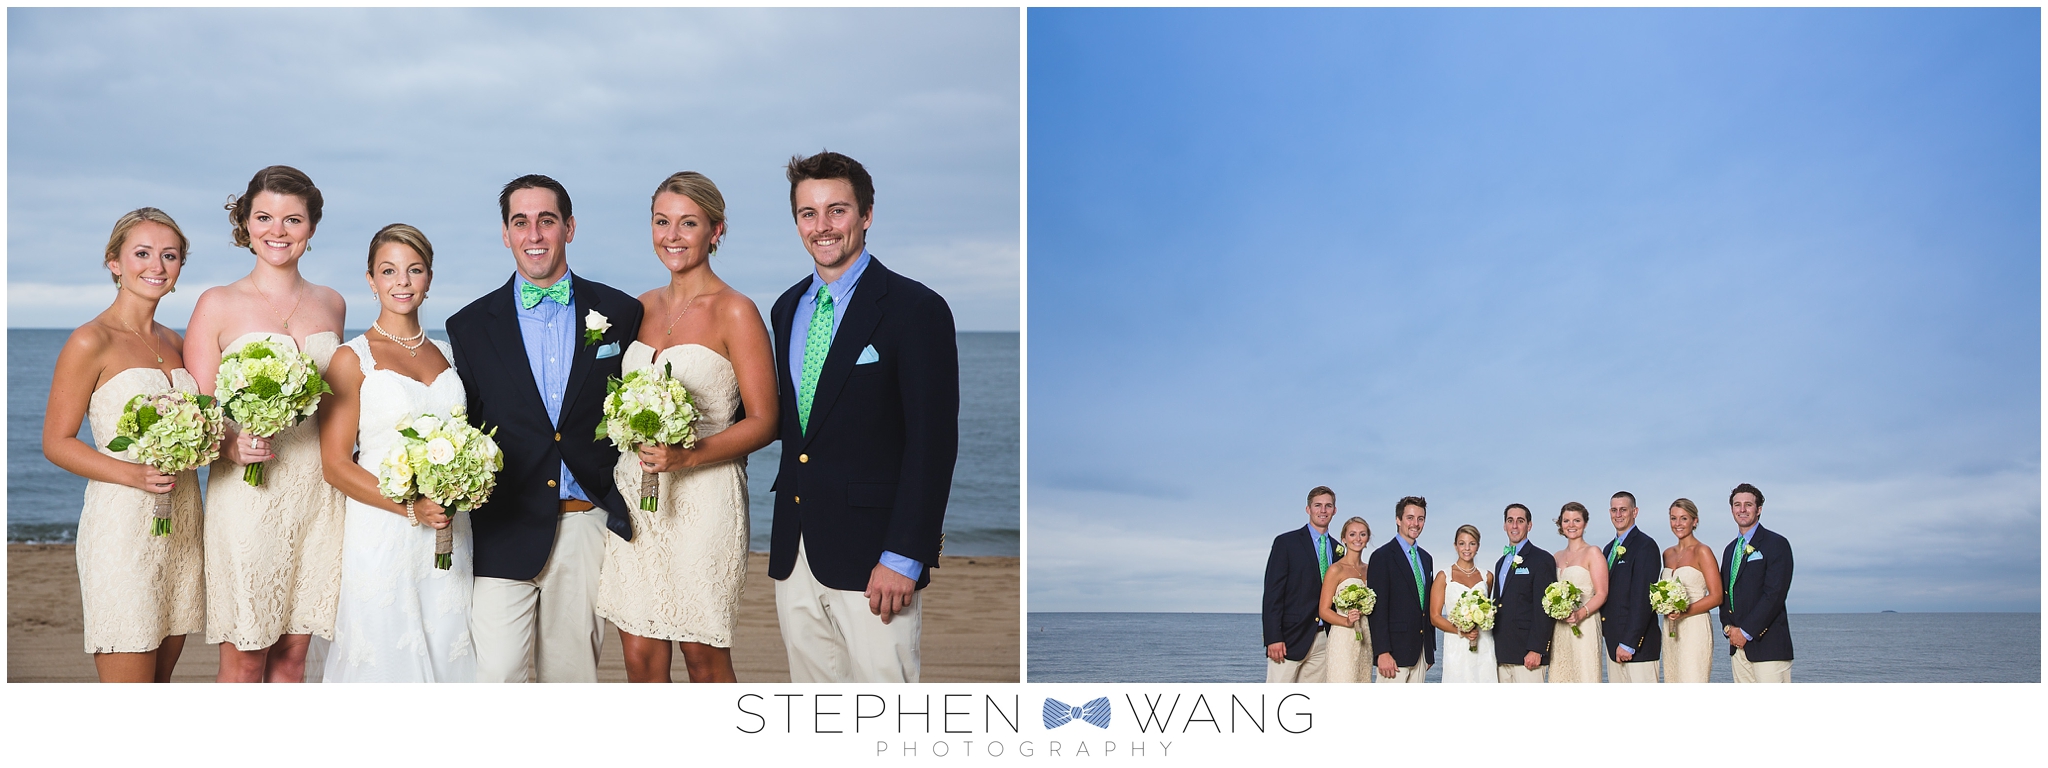 Stephen Wang Photography Madison Surf Club Wedding Photogrpahy CT Connecticut Shoreline Beach Summer Sunset -08-12_0016.jpg